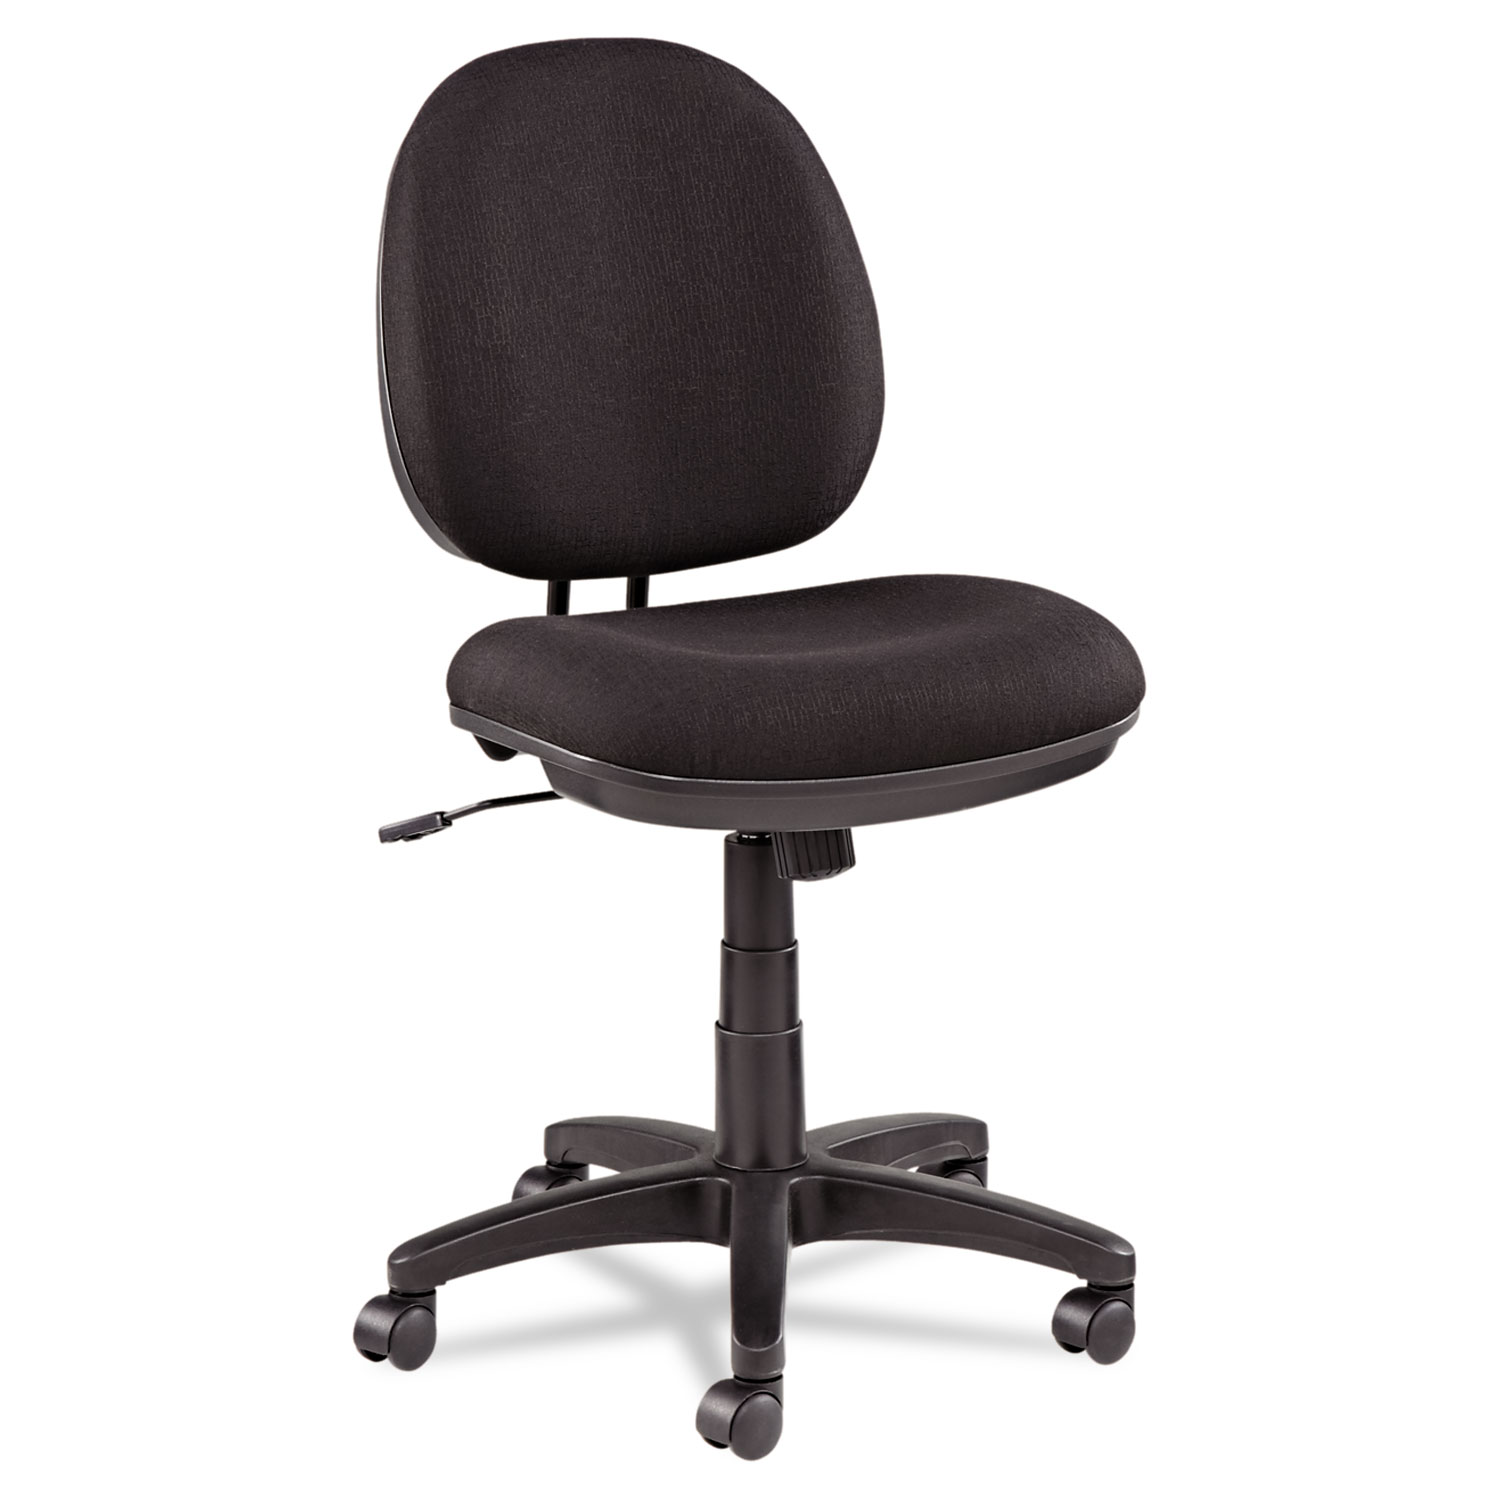  Alera ALEIN4811 Alera Interval Series Swivel/Tilt Task Chair, Supports up to 275 lbs., Black Seat/Black Back, Black Base (ALEIN4811) 